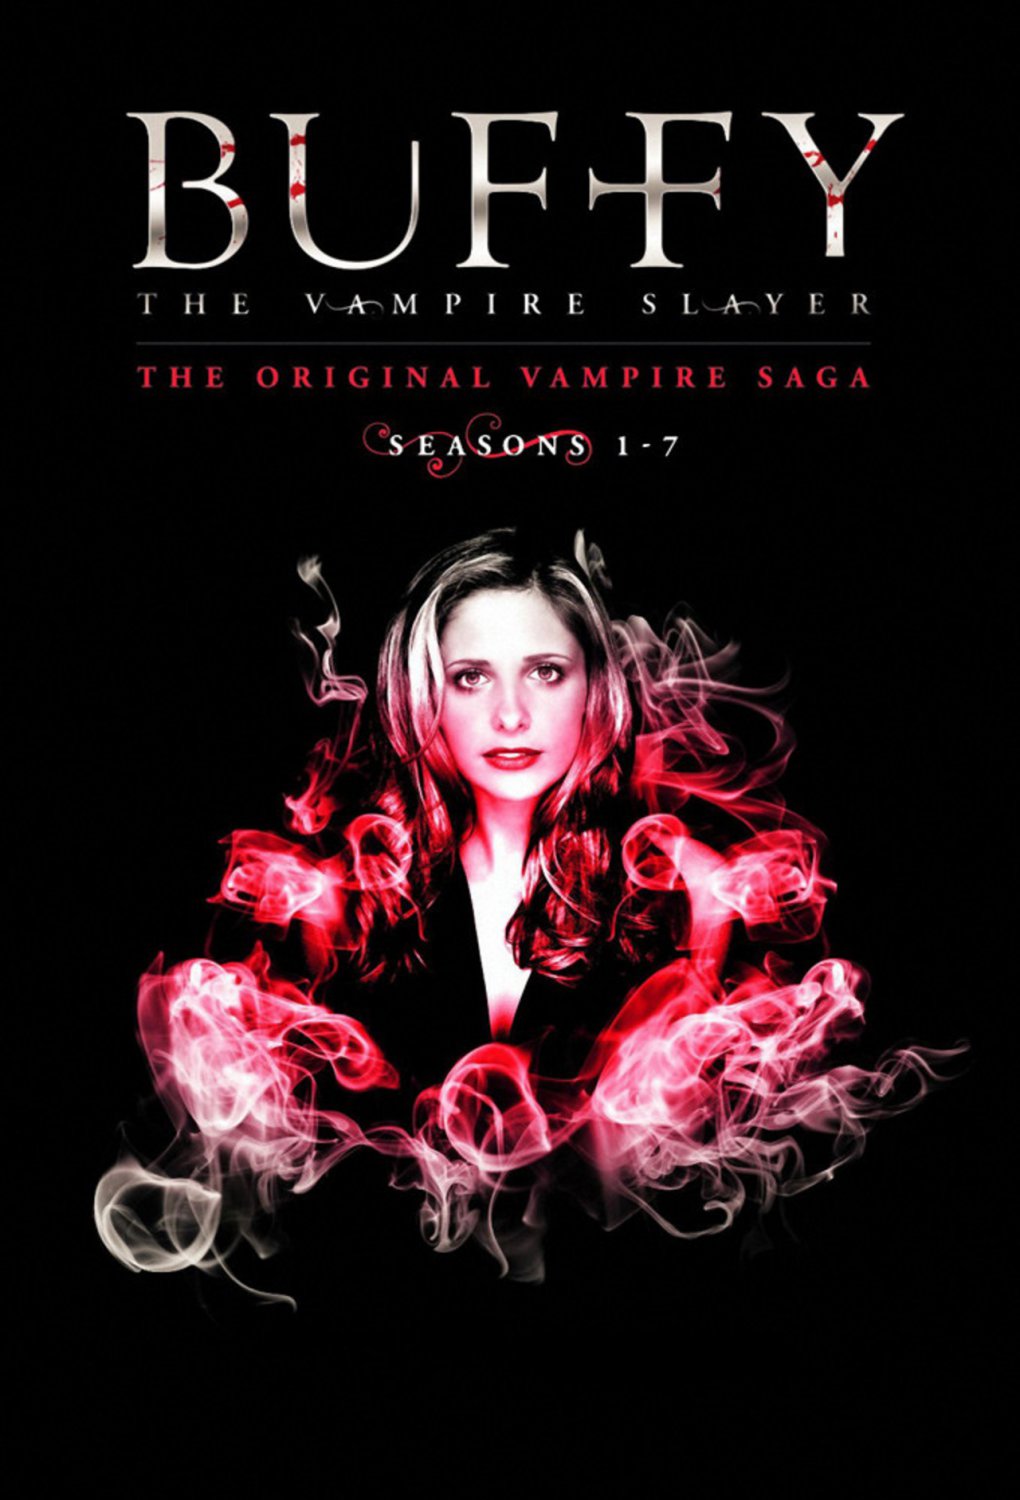 Buffy Version E Movie Poster 13x19 inches